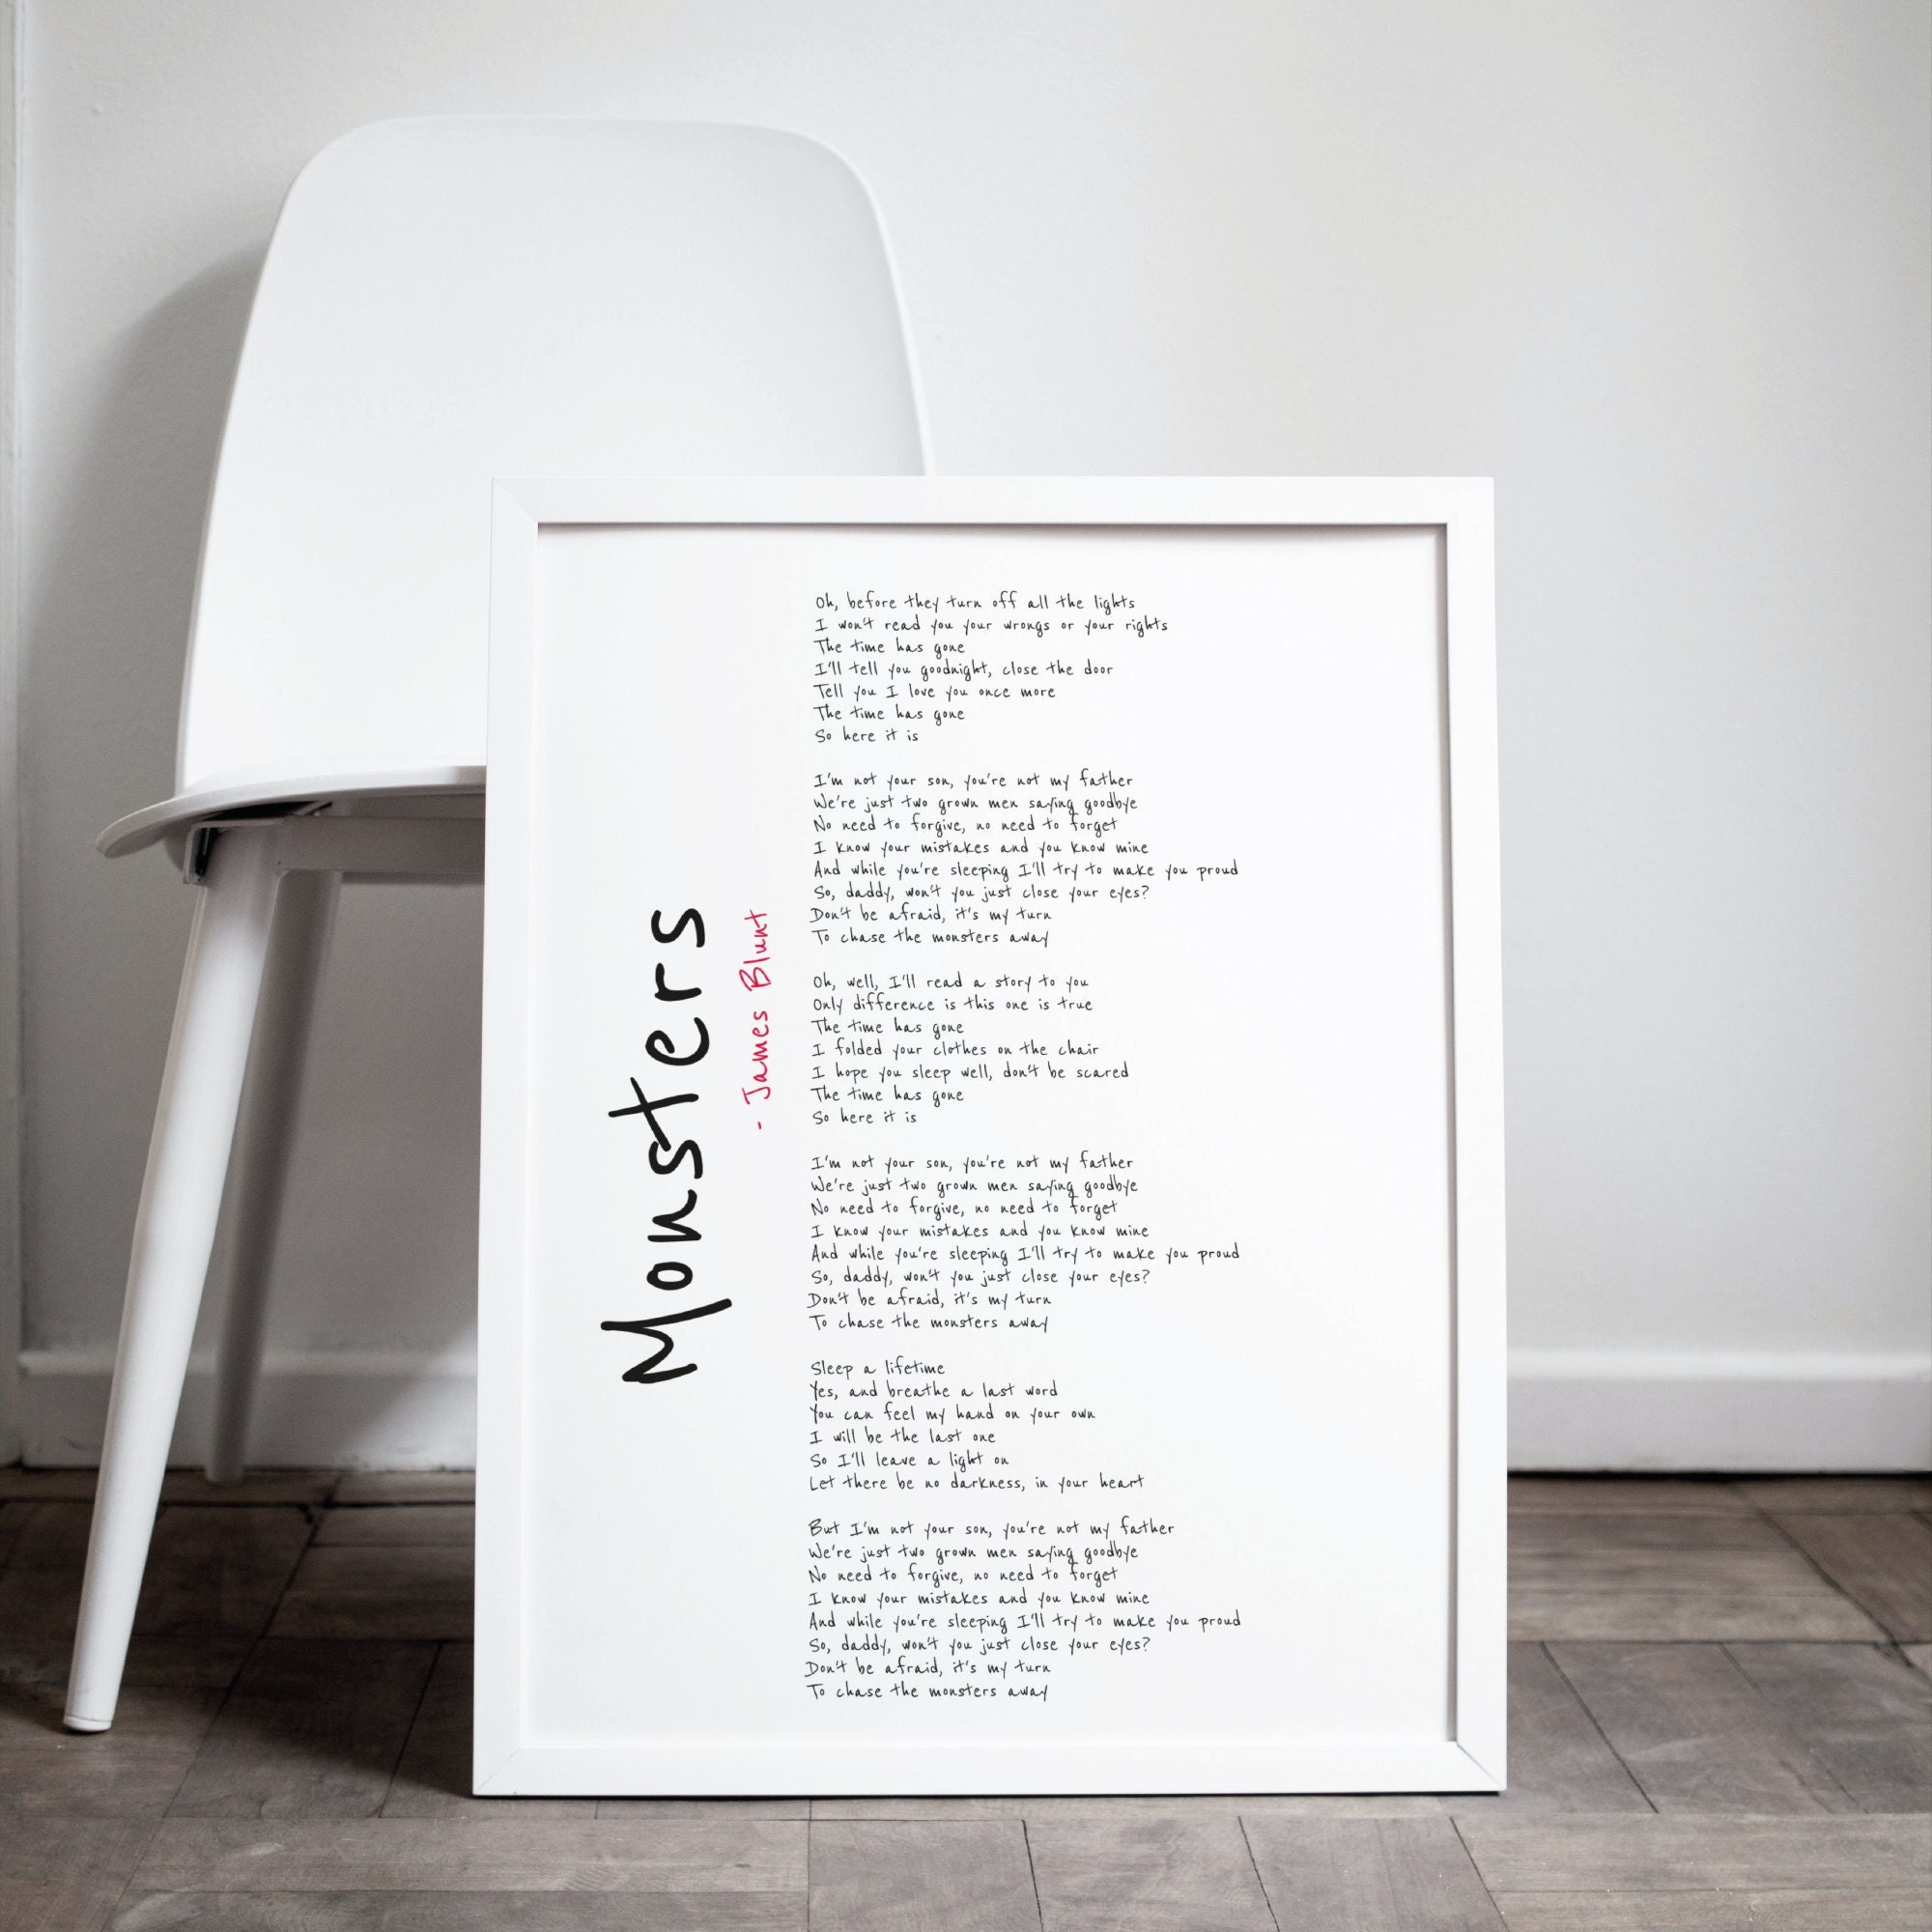 Monsters by James Blunt Lyrics Poster James Blunt Monsters 